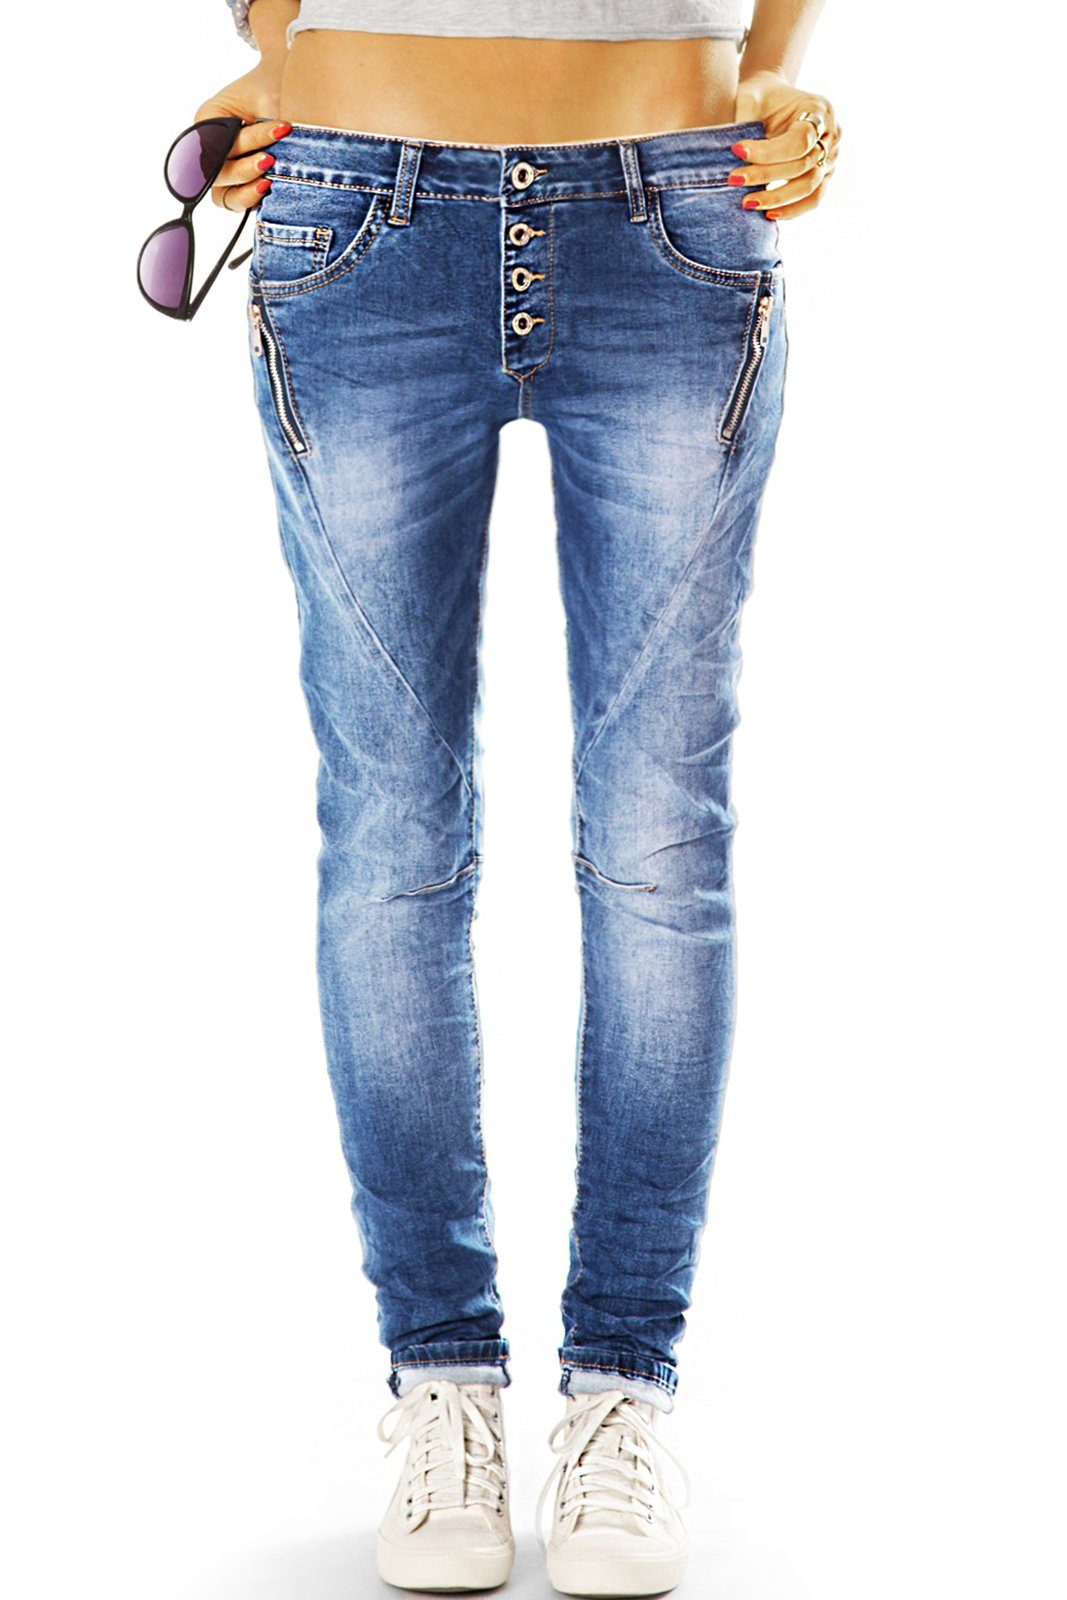 be styled Low-rise-Jeans Low Rise Hüftjeans Hose bequeme Slim Fit Jeans - Damen- j6f-1 mit Stretch-Anteil, 5-Pocket-Style